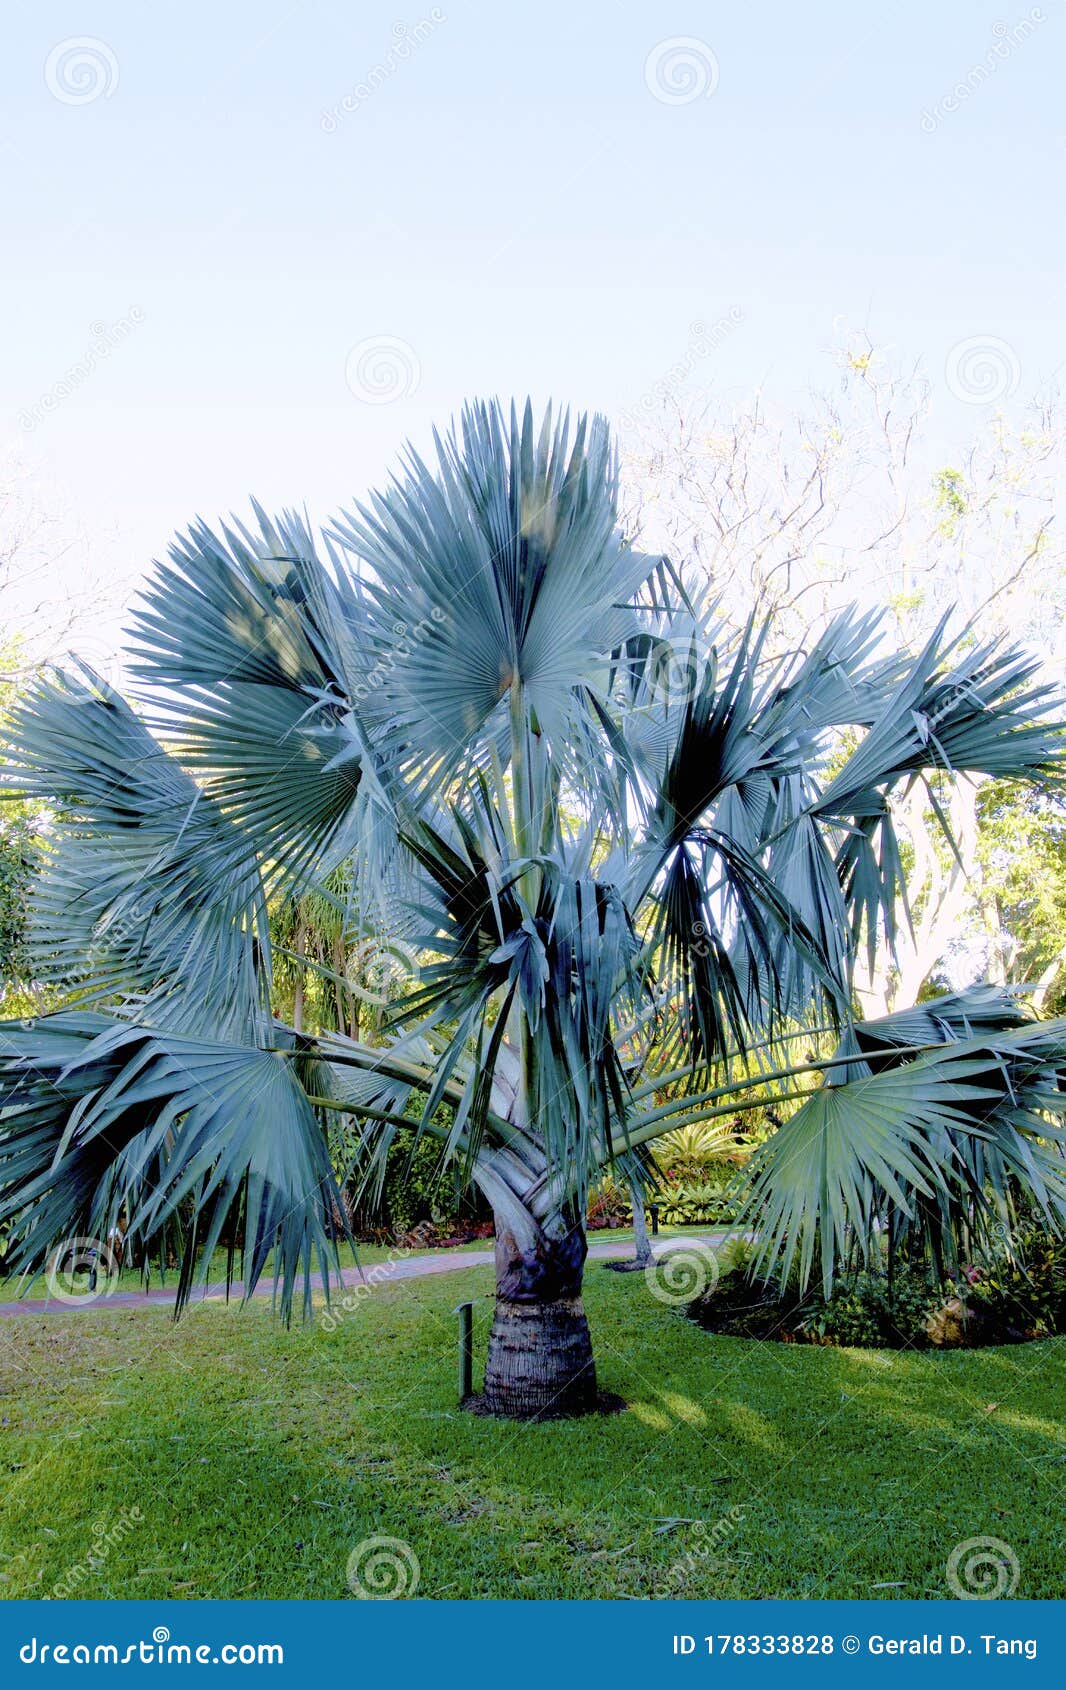 bismarck palm  837878